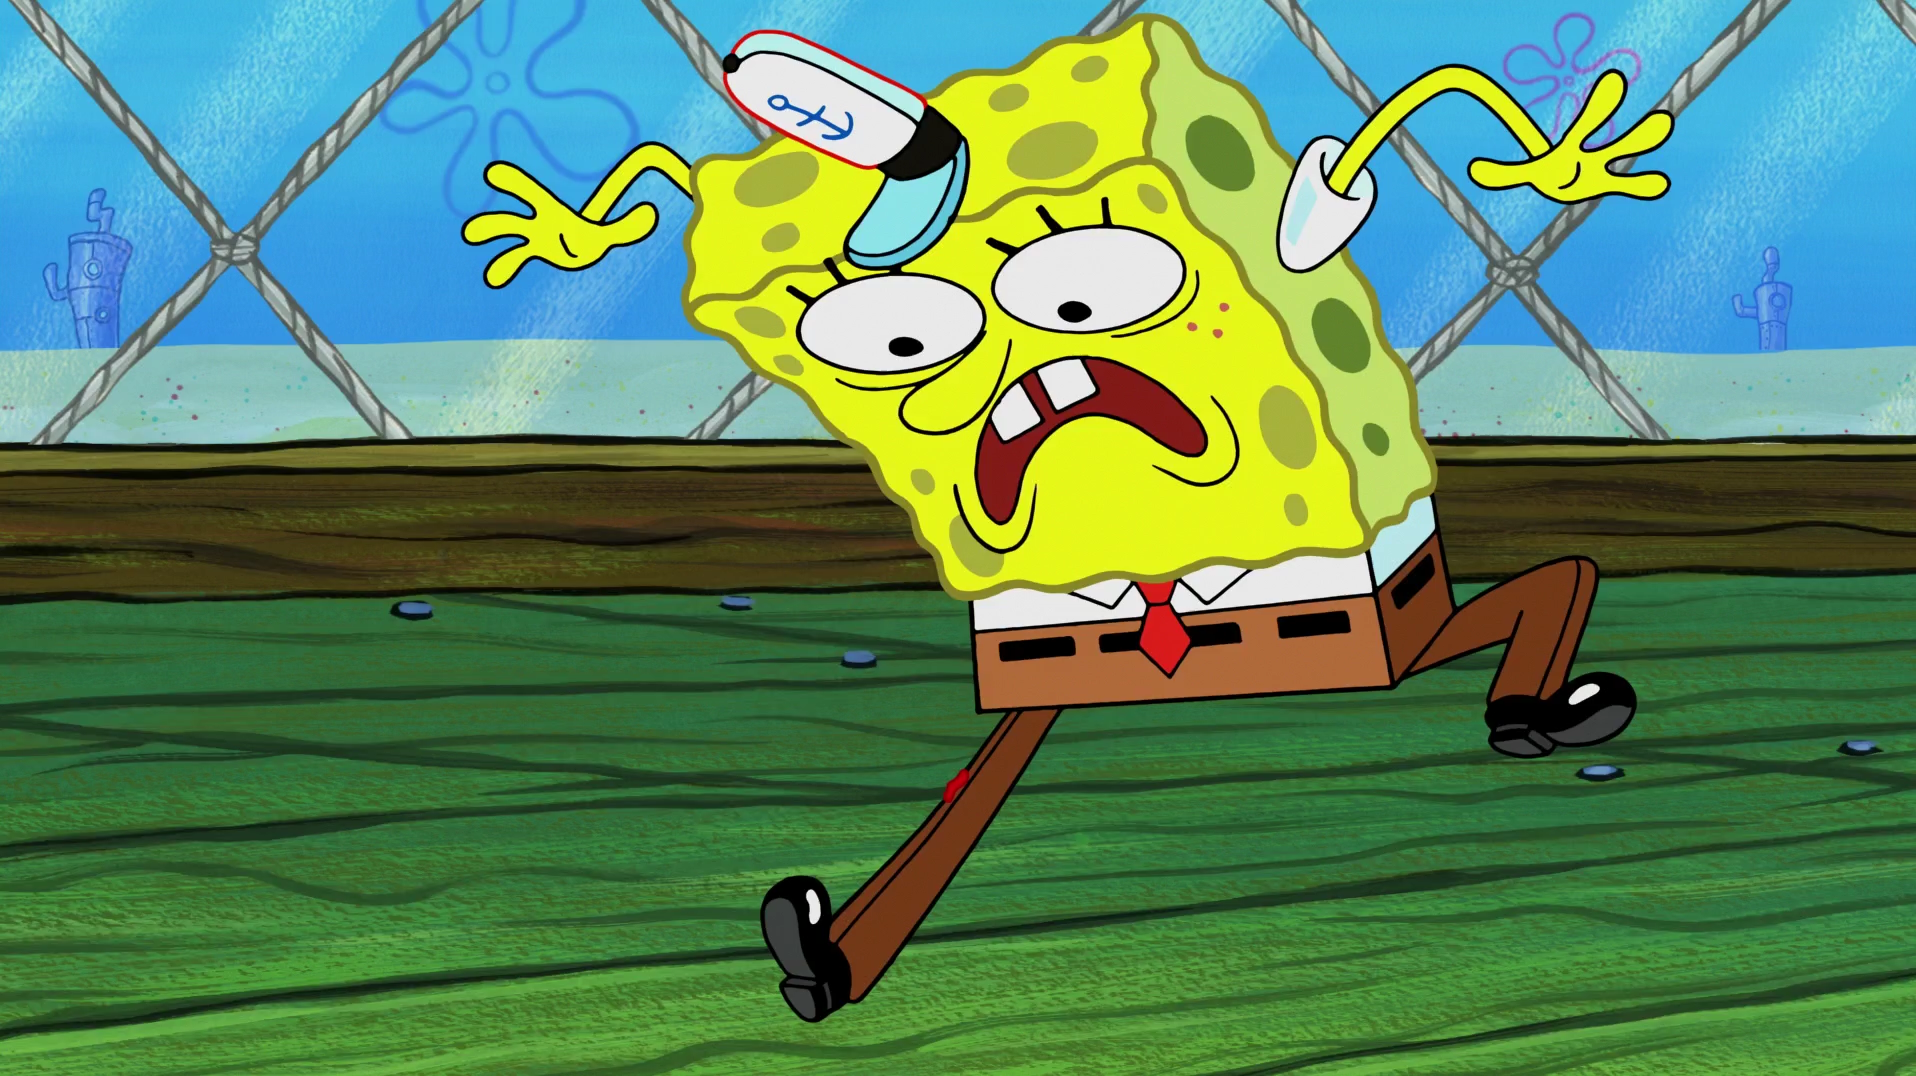 Hoes mad spongebob flag - ðŸ§¡ Image - 343979 SpongeBob SquarePants Know Your...